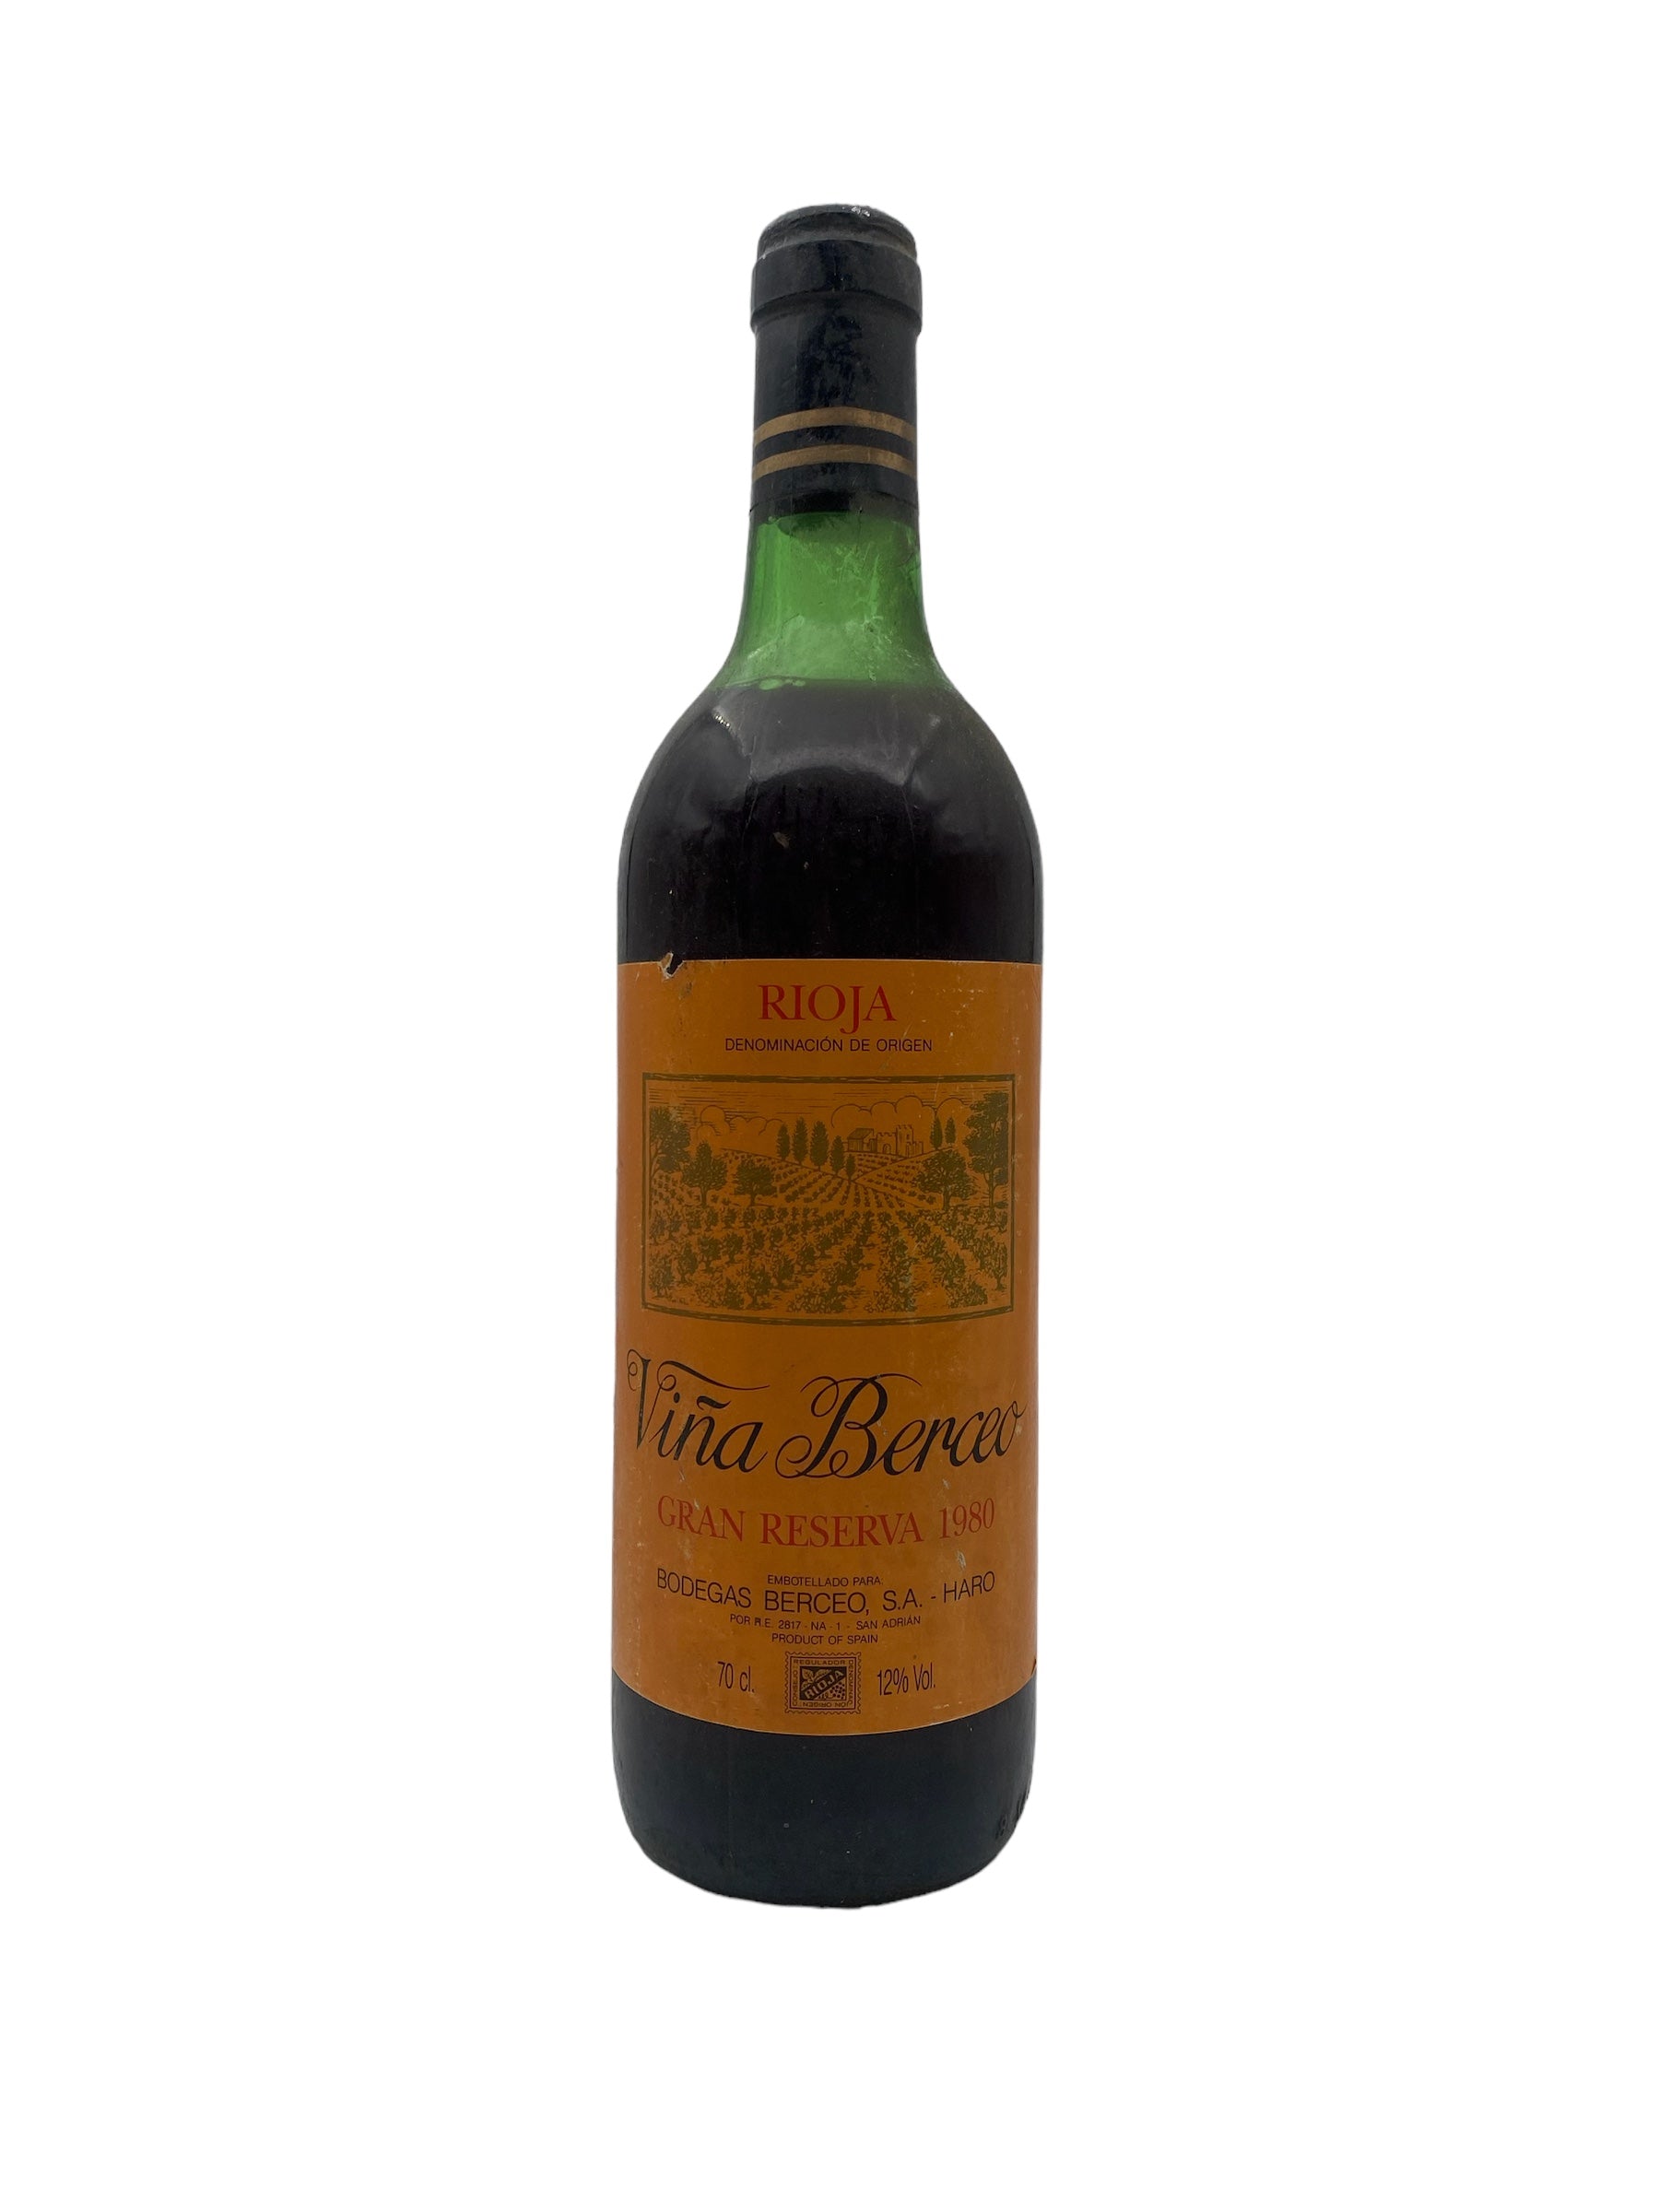 Se Rioja Viña Berceo 1980 Gran Reserva hos Bottleswithhistory.dk